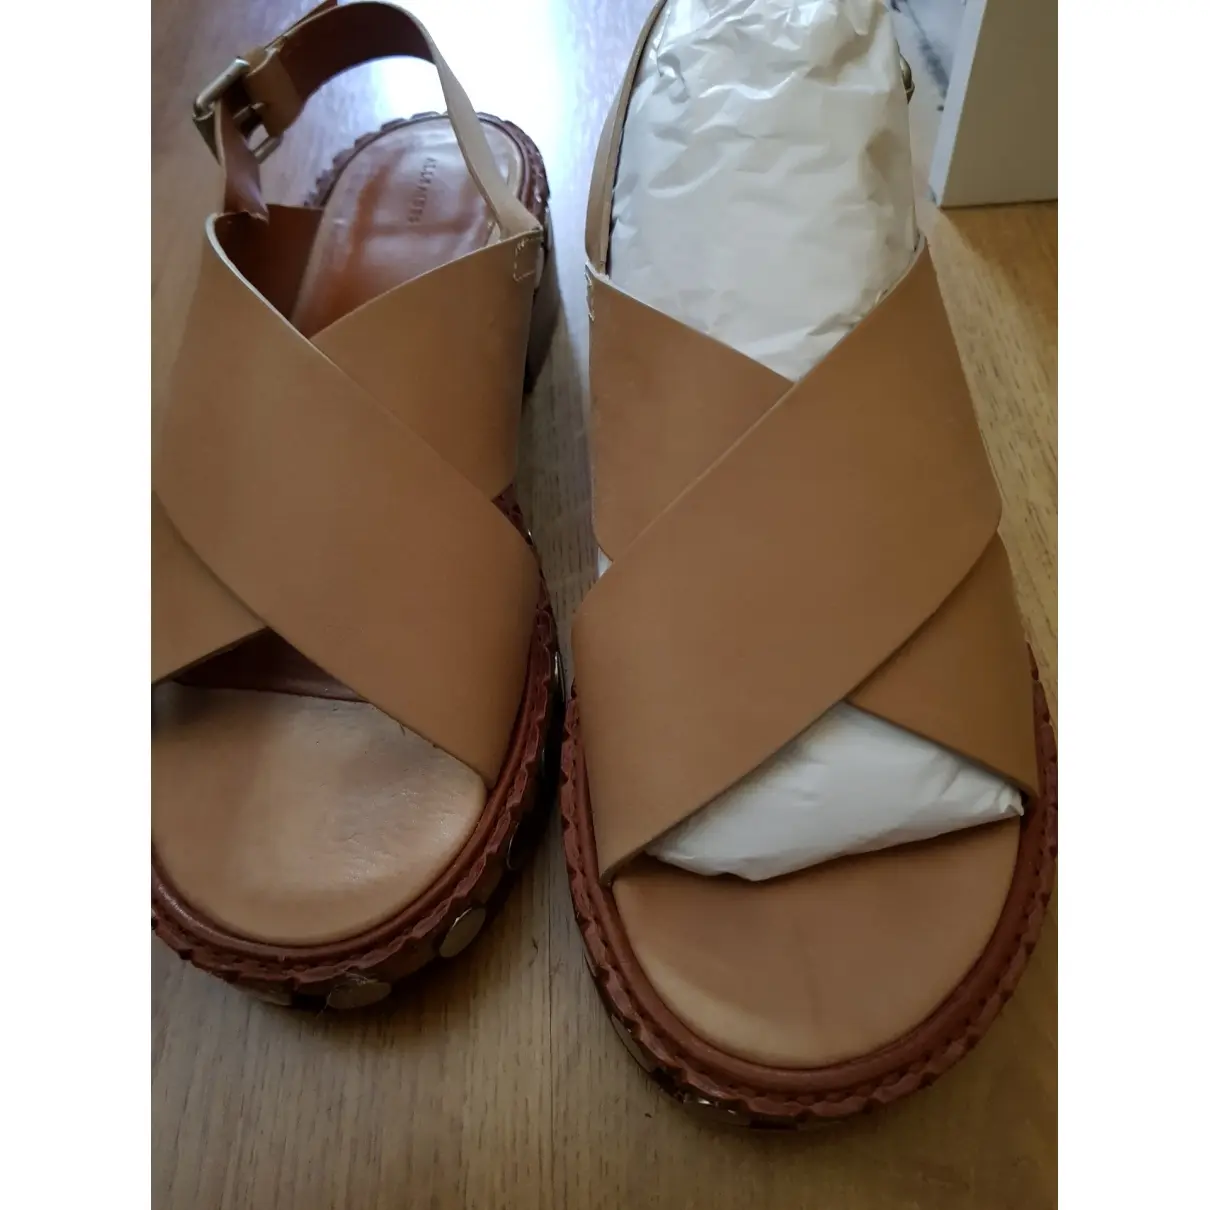 Buy All Saints Leather sandal online